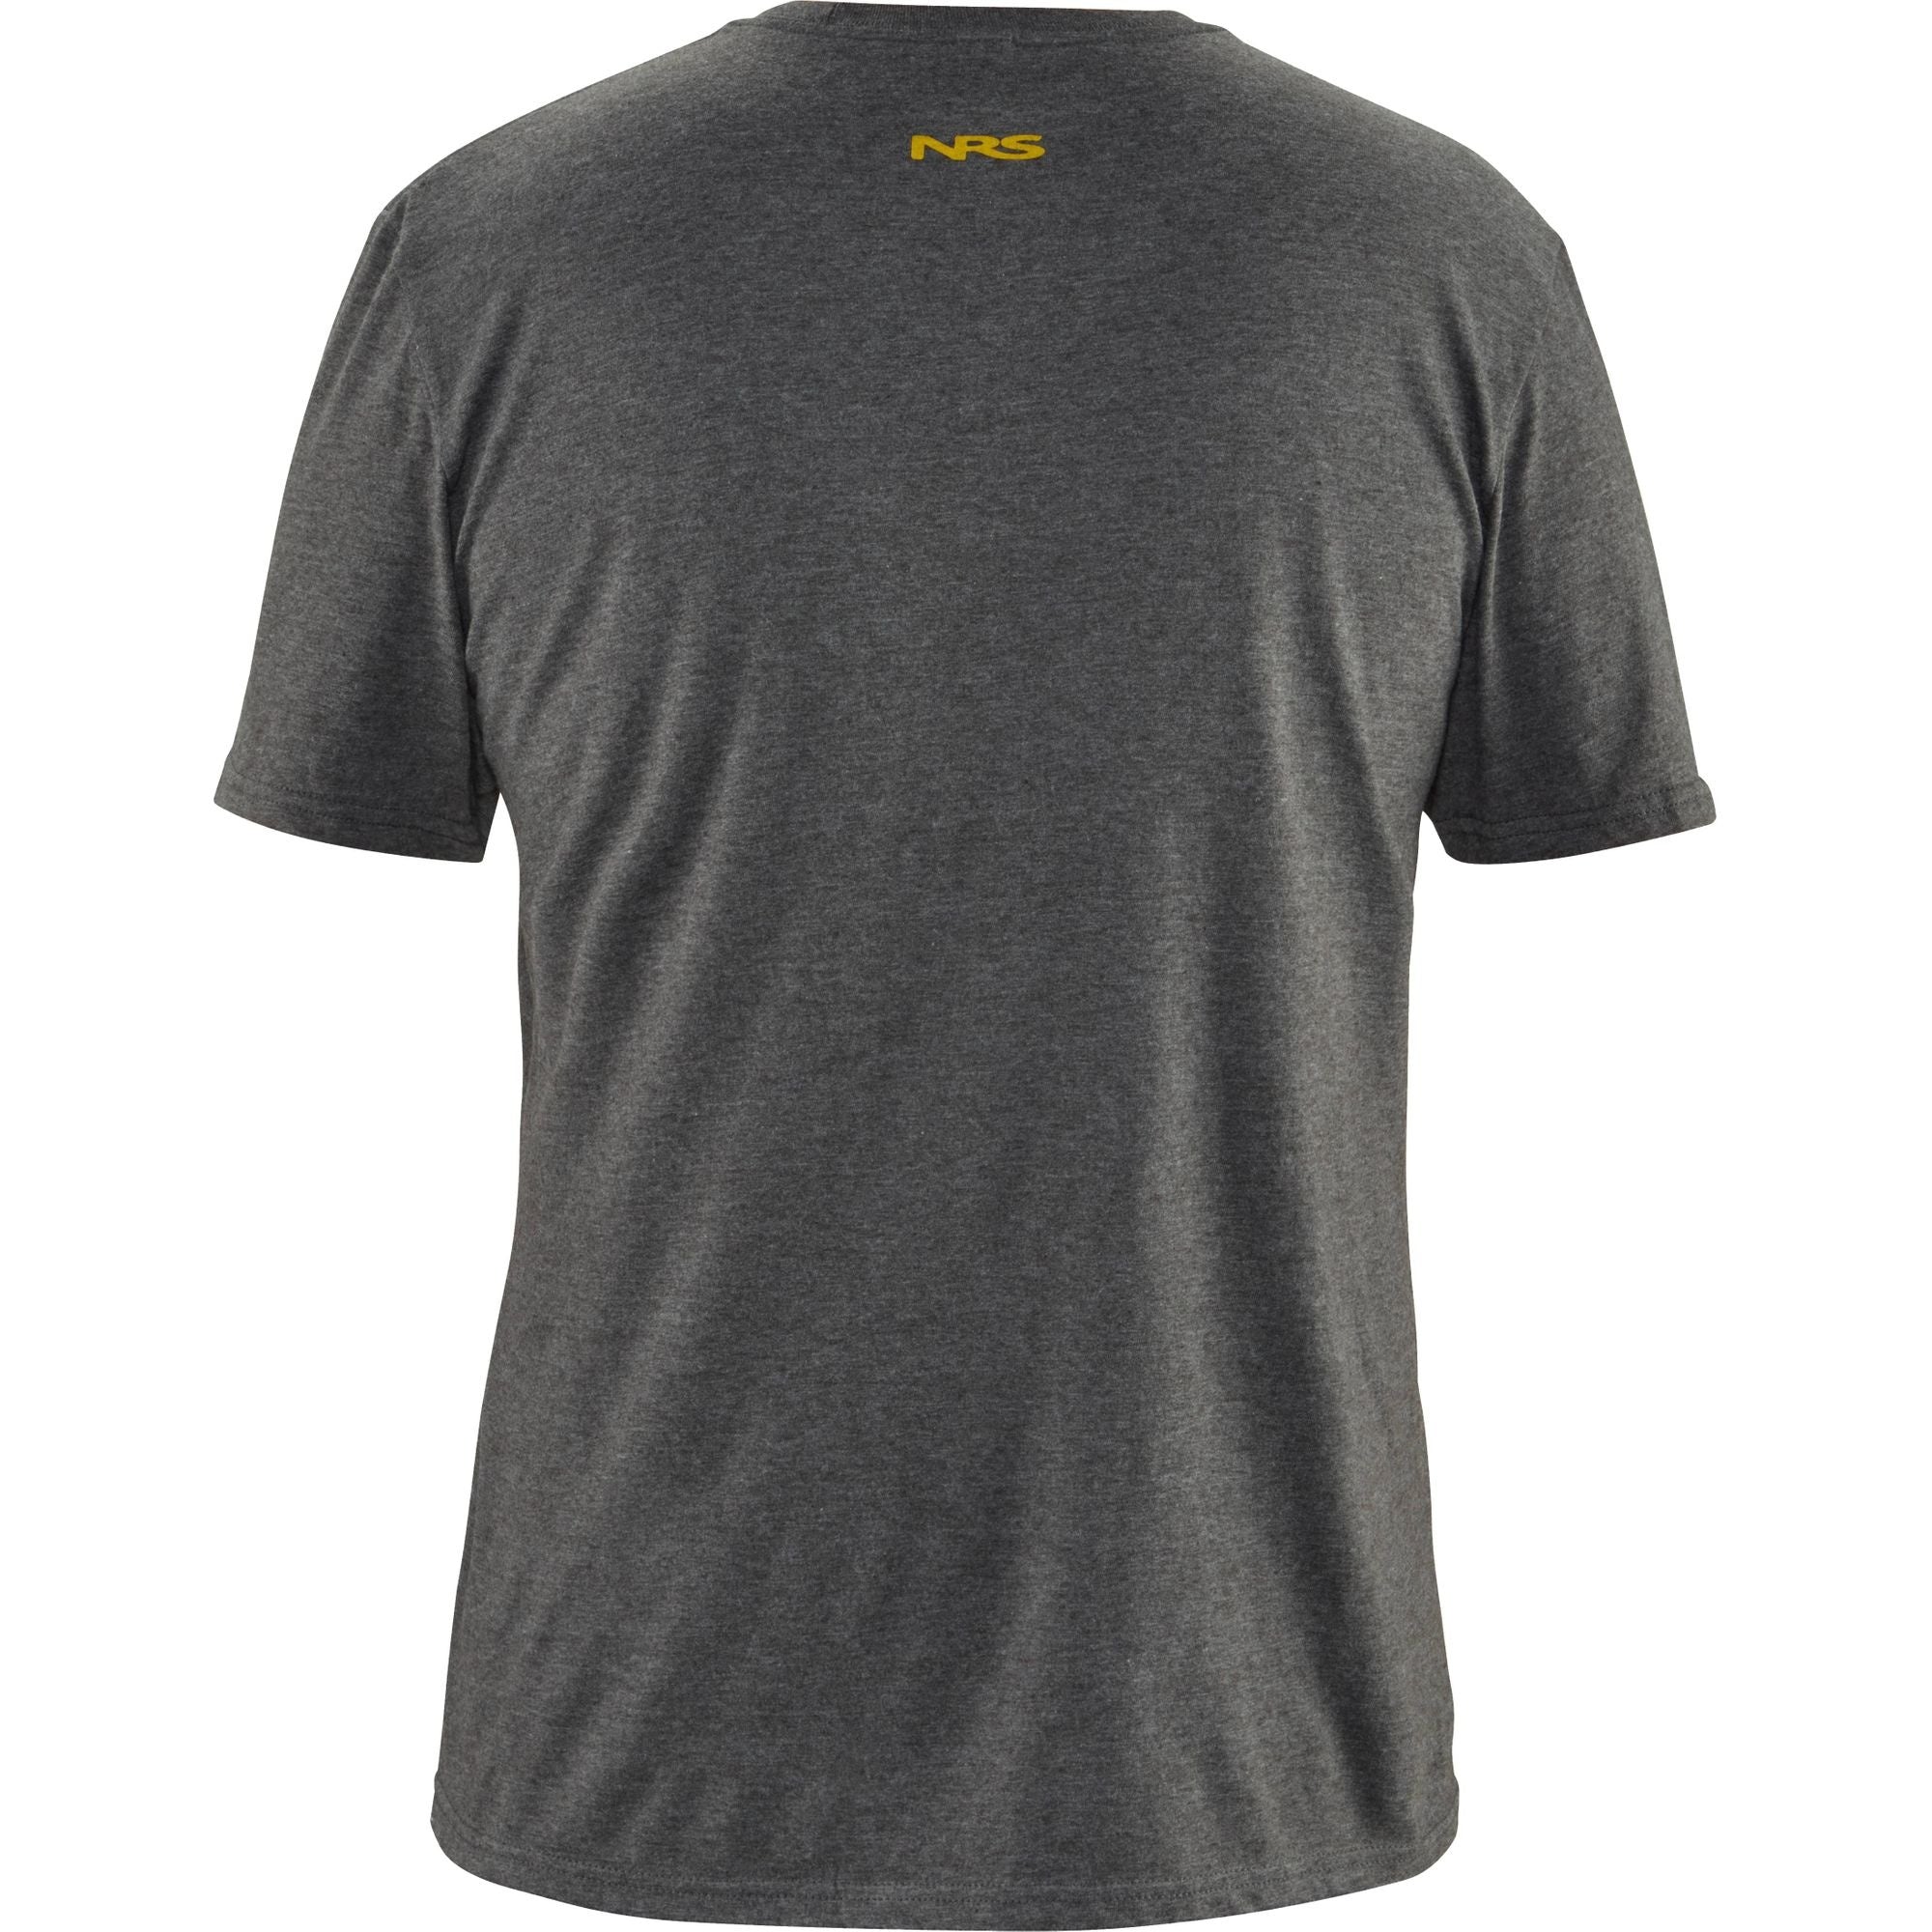 NRS - Men's Idaho T-Shirt